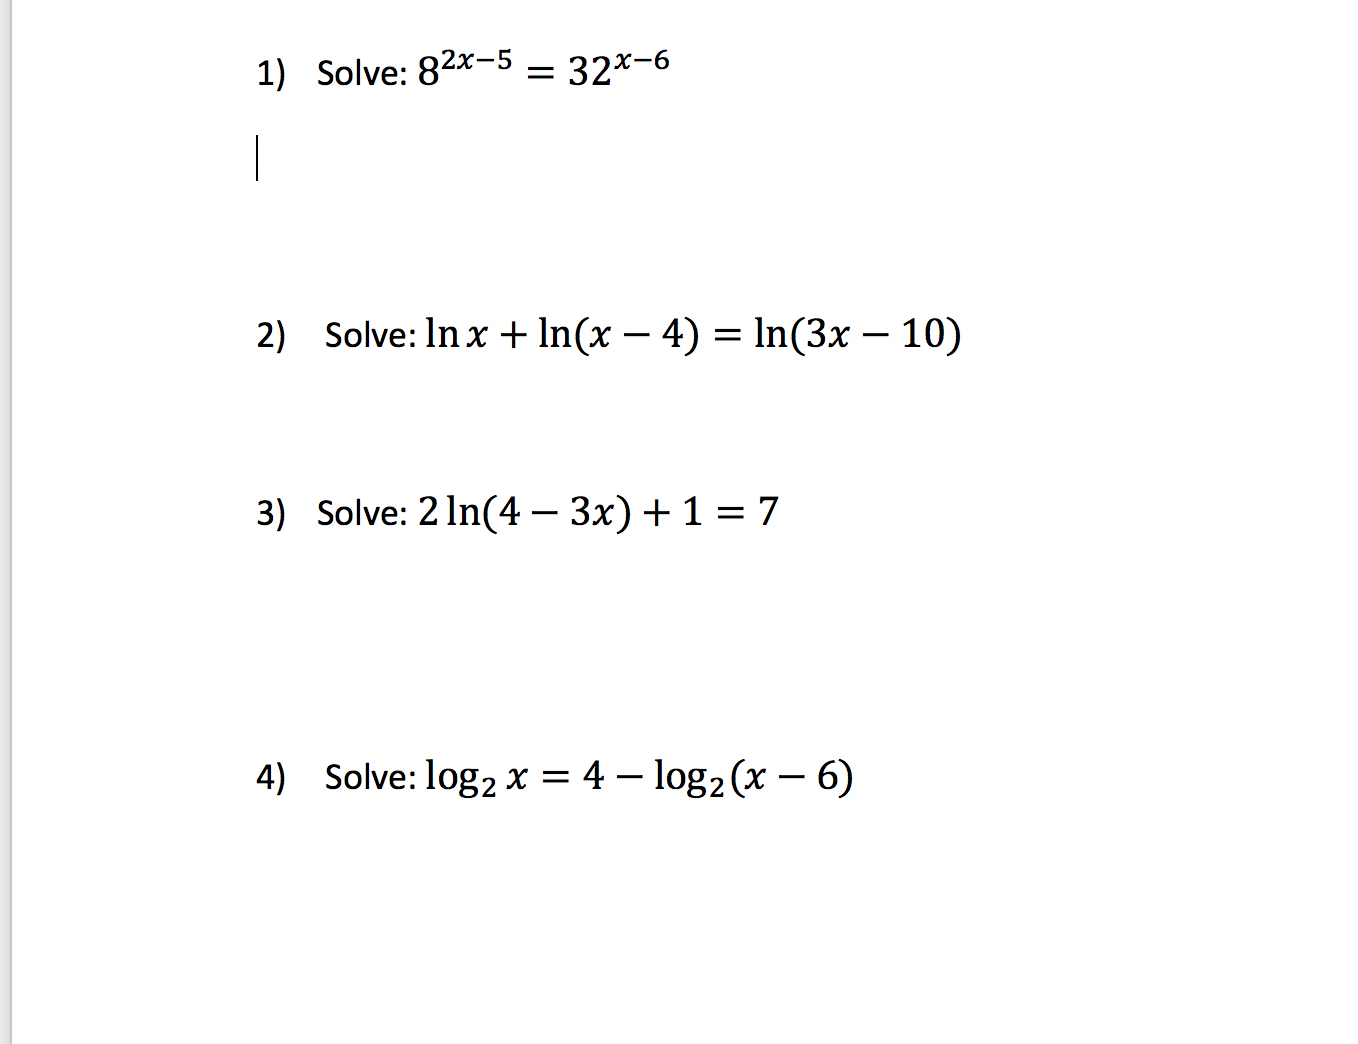 1) Solve: 82x-5 32-6
2) Solve: In x In(x
4) ln(3x - 10)
Solve: 2 ln(4
3x) 1 = 7
3)
Solve: log2 x = 4 - log2(x - 6)
4)
